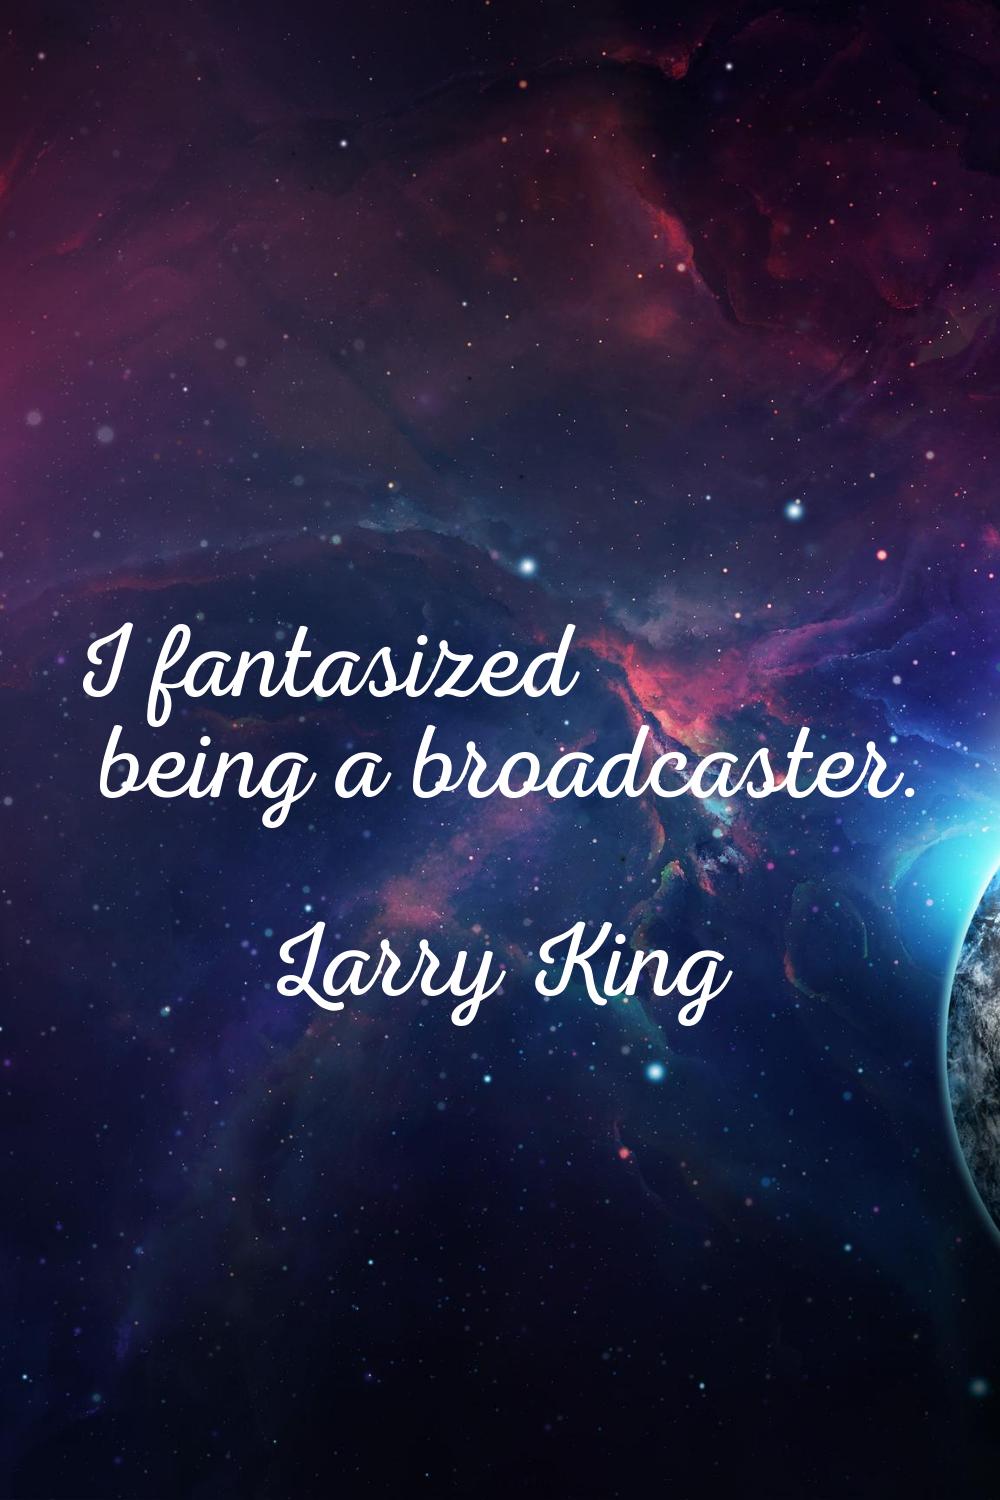 I fantasized being a broadcaster.